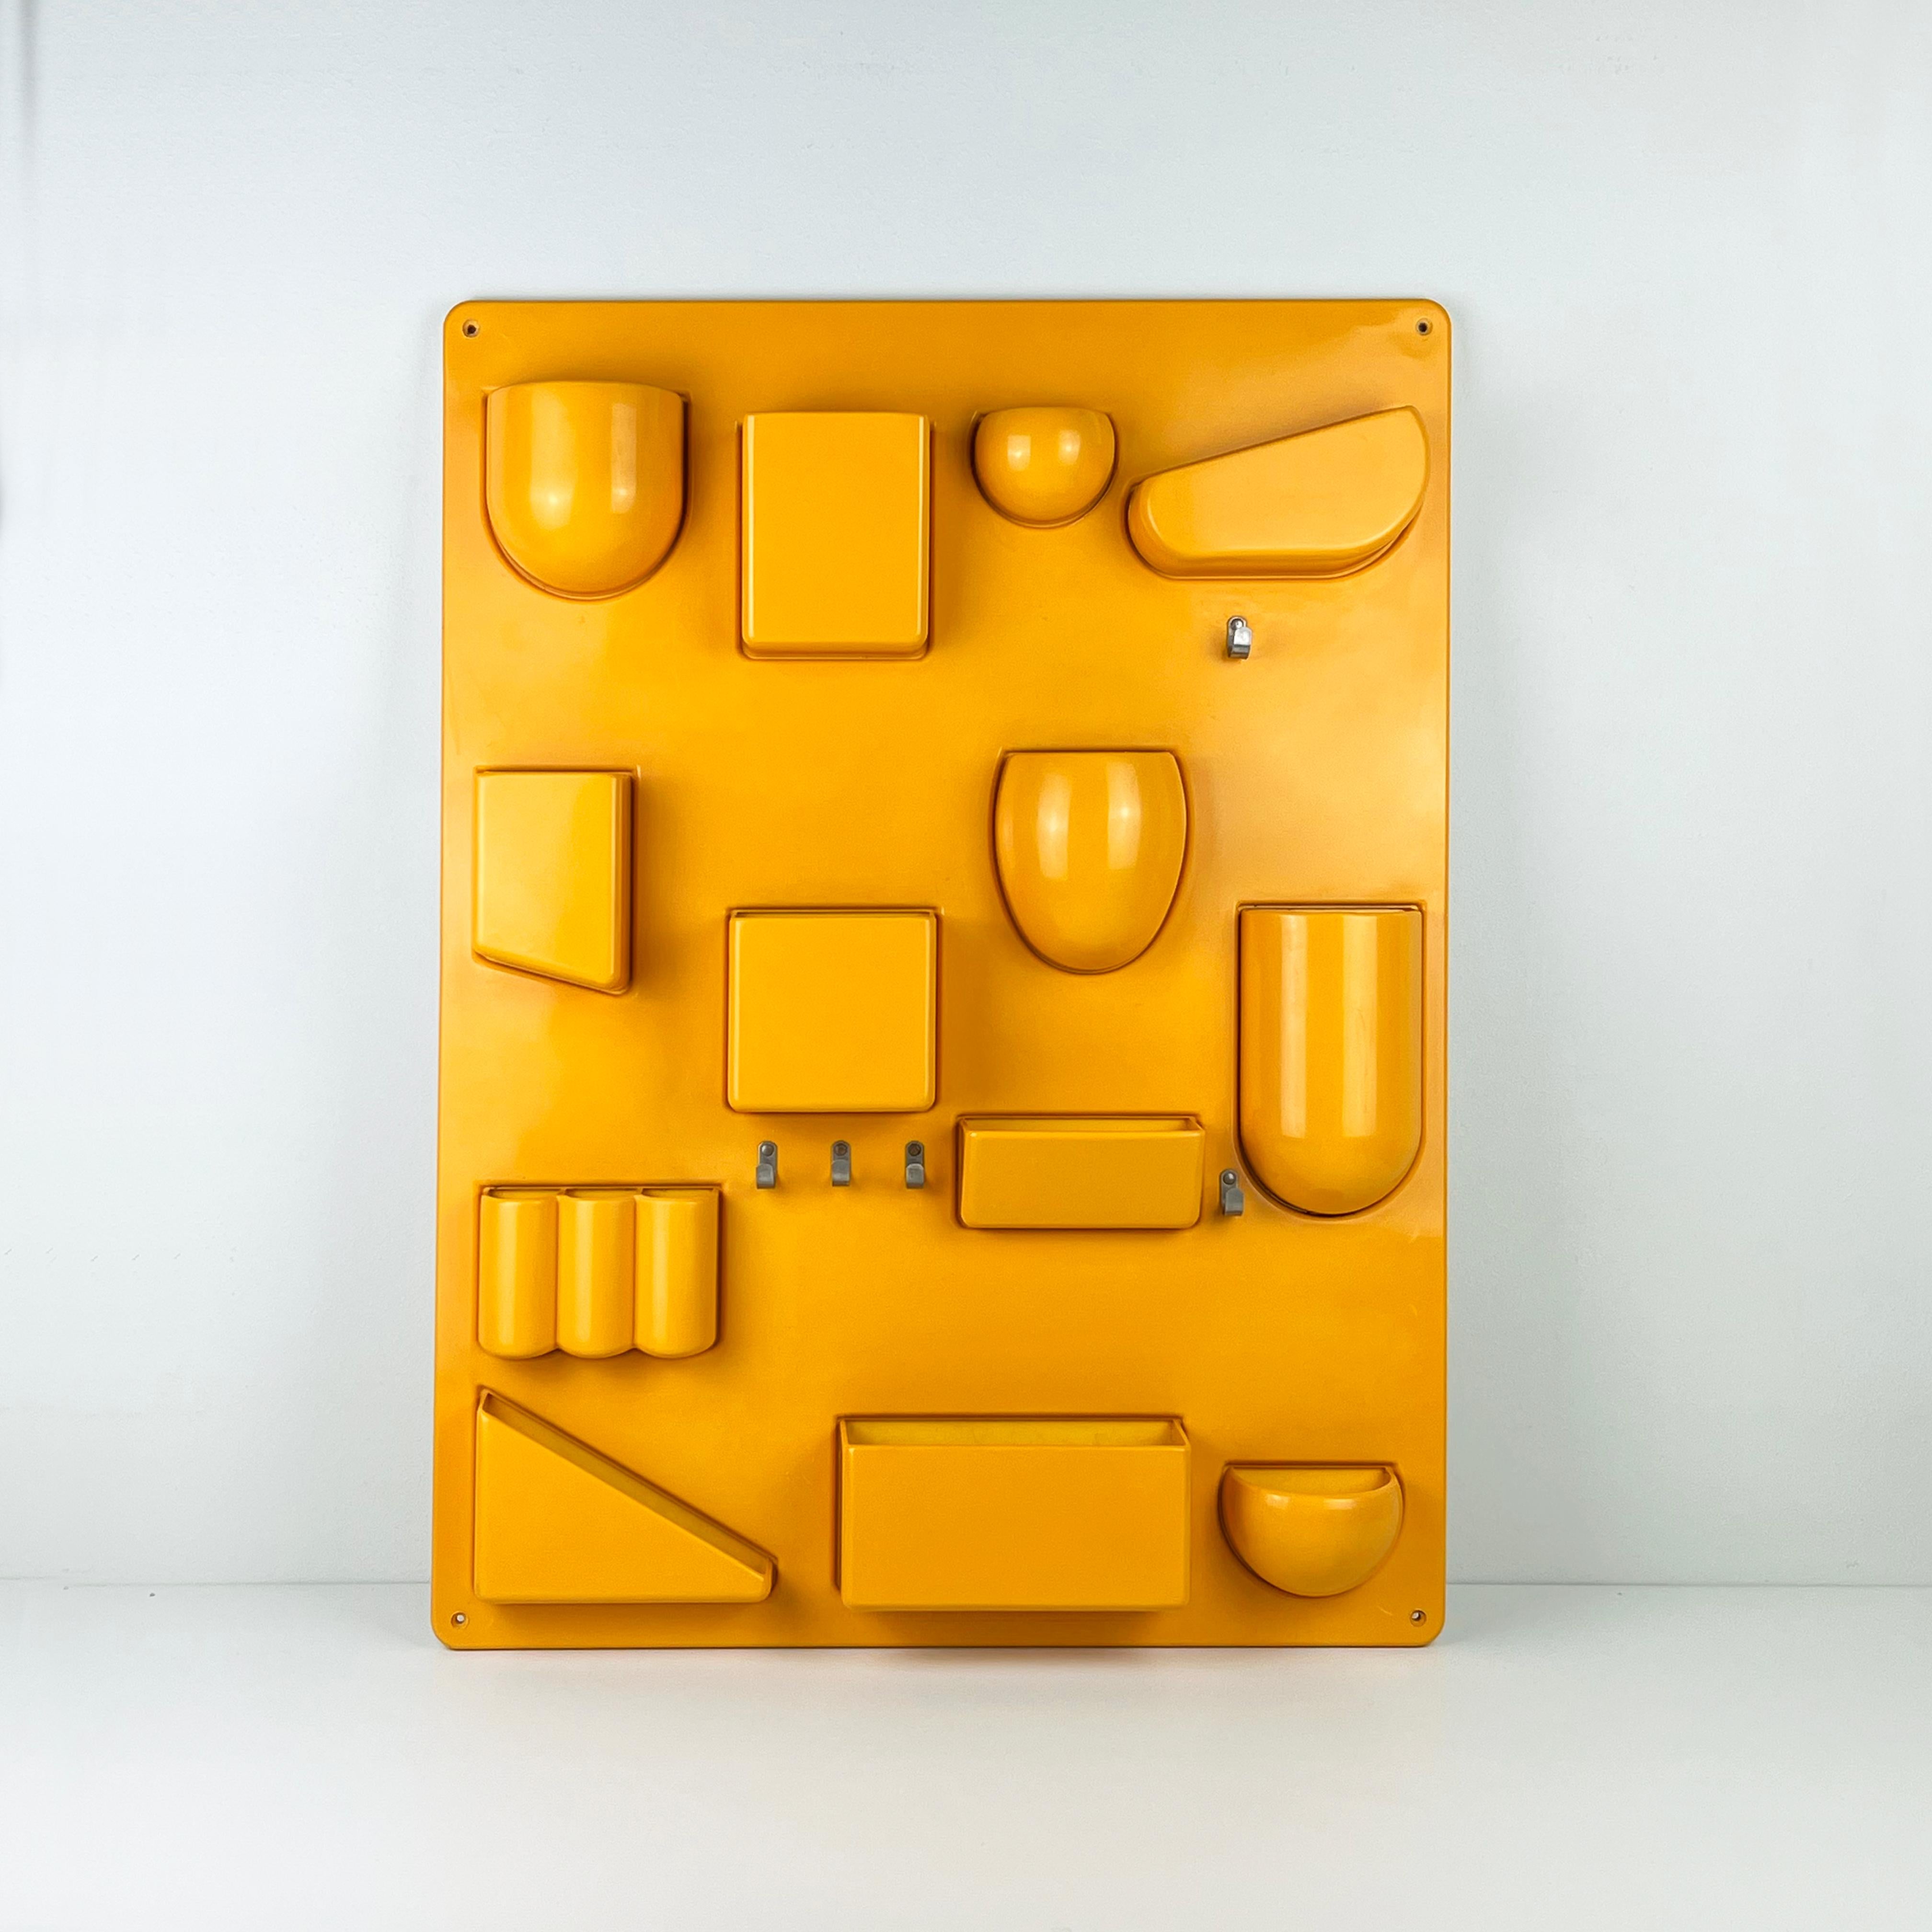 Mid-Century Modern Yellow “Utensilo” Plastic Wall Storage Unit designed by Dorothee Maurer Becker 